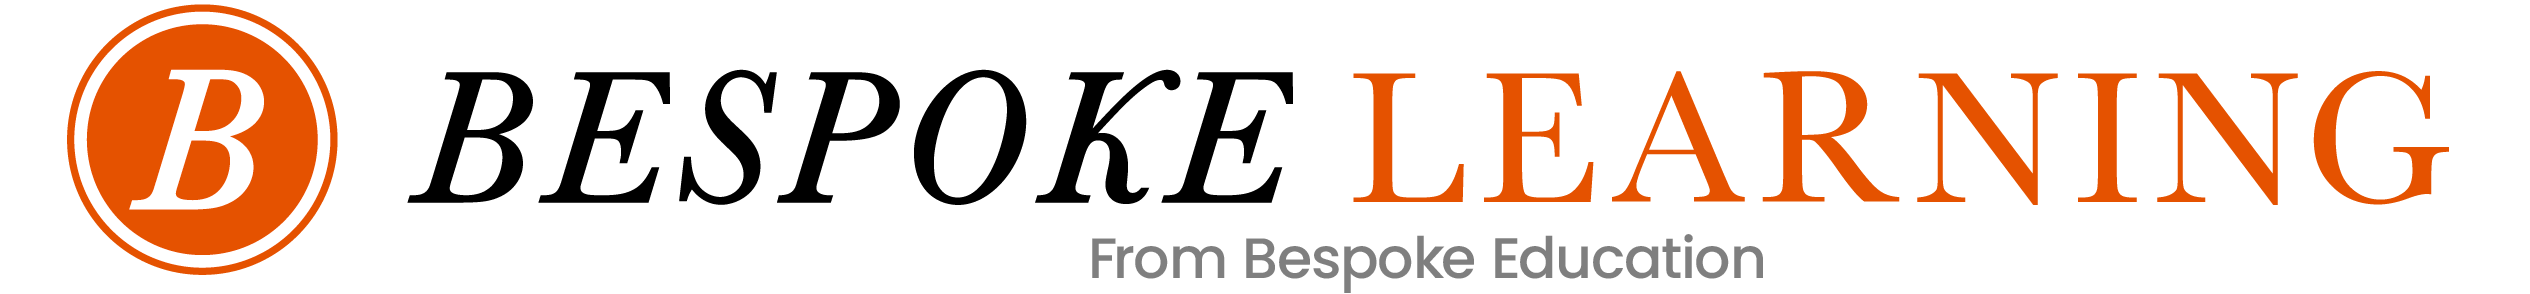 Bespoke Learning Logo